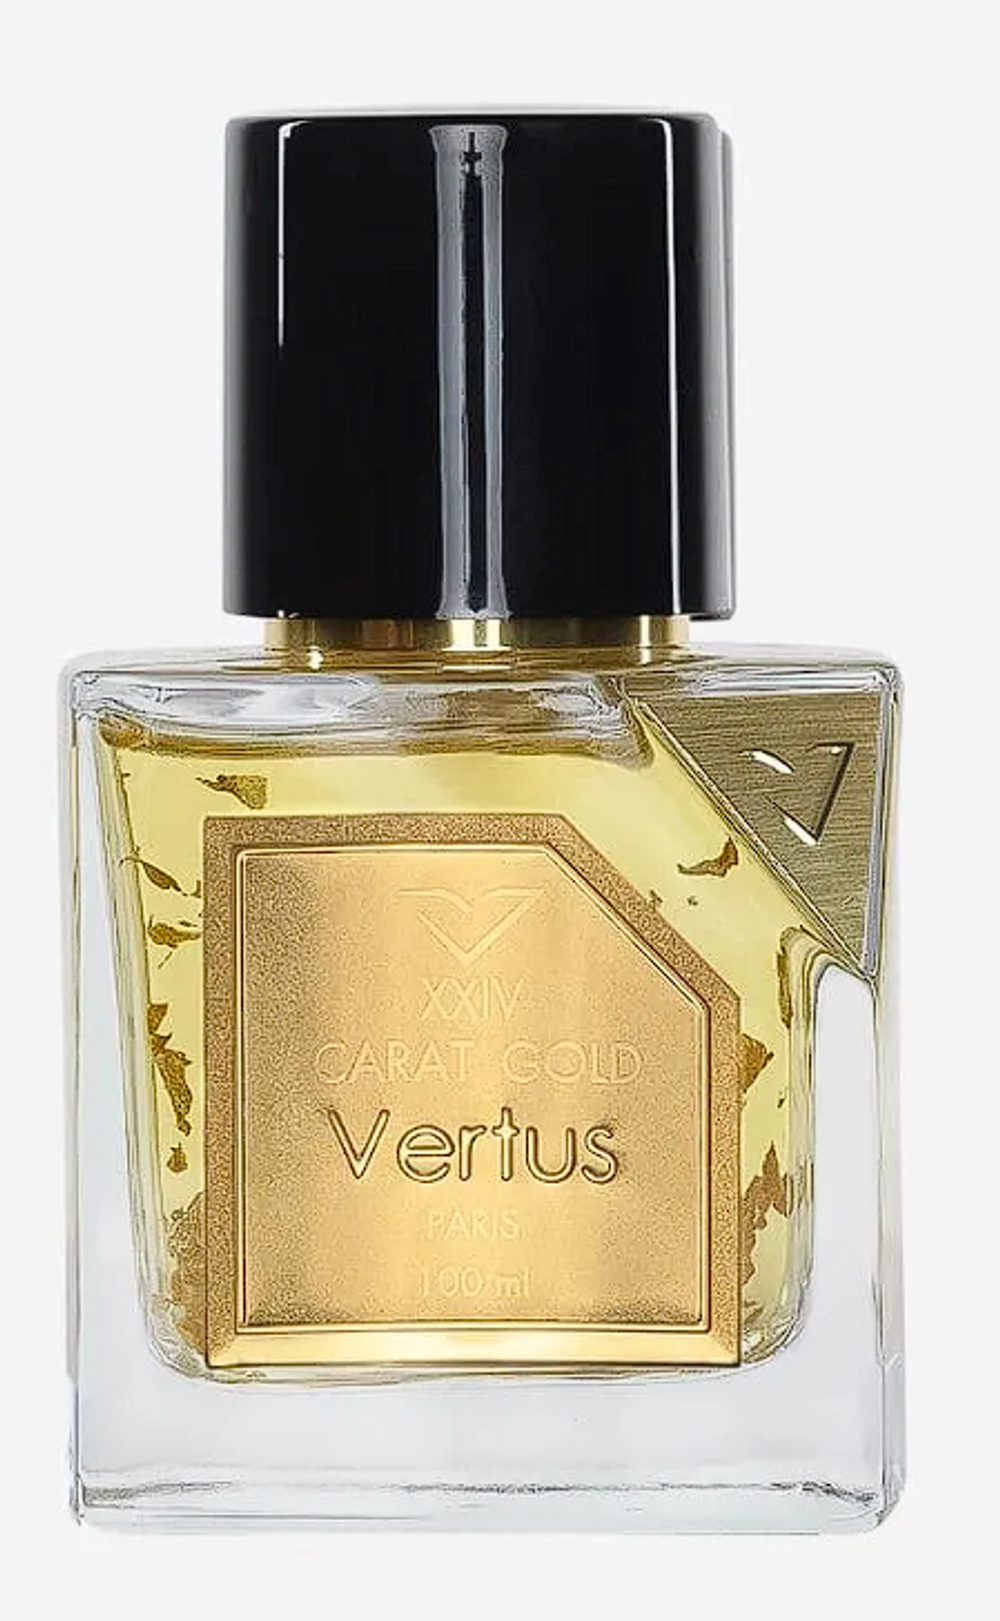 VERTUS XXIV Carat Gold  100ml (duty free парфюмерия)